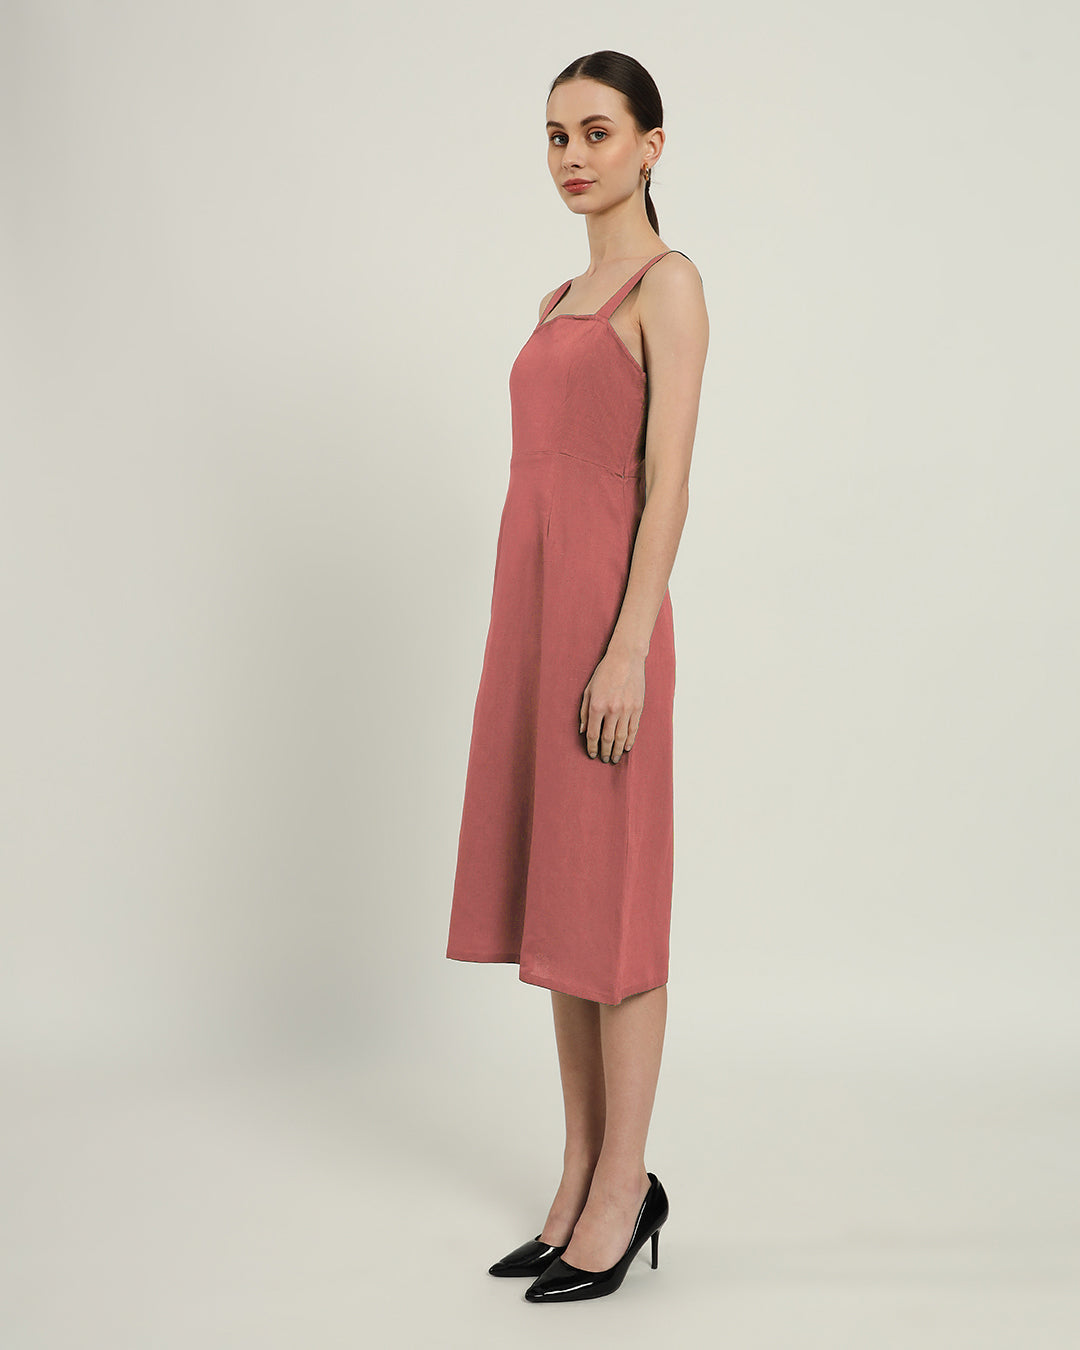 The Samara Ivory Pink Cotton Dress